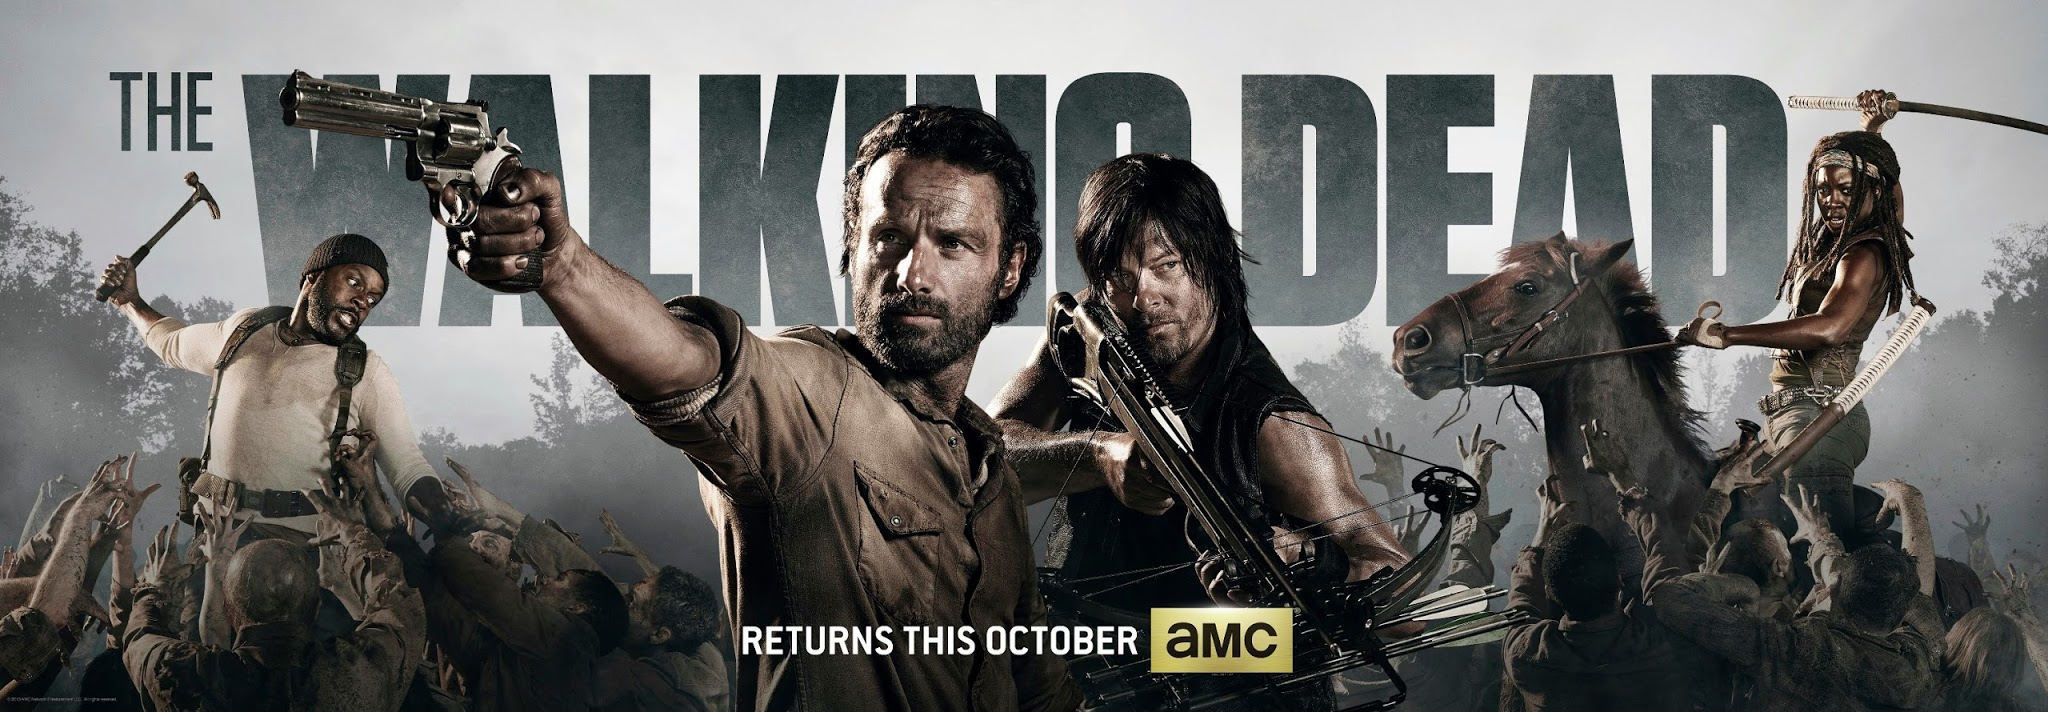 The Walking Dead Poster Temporada 4 HQ